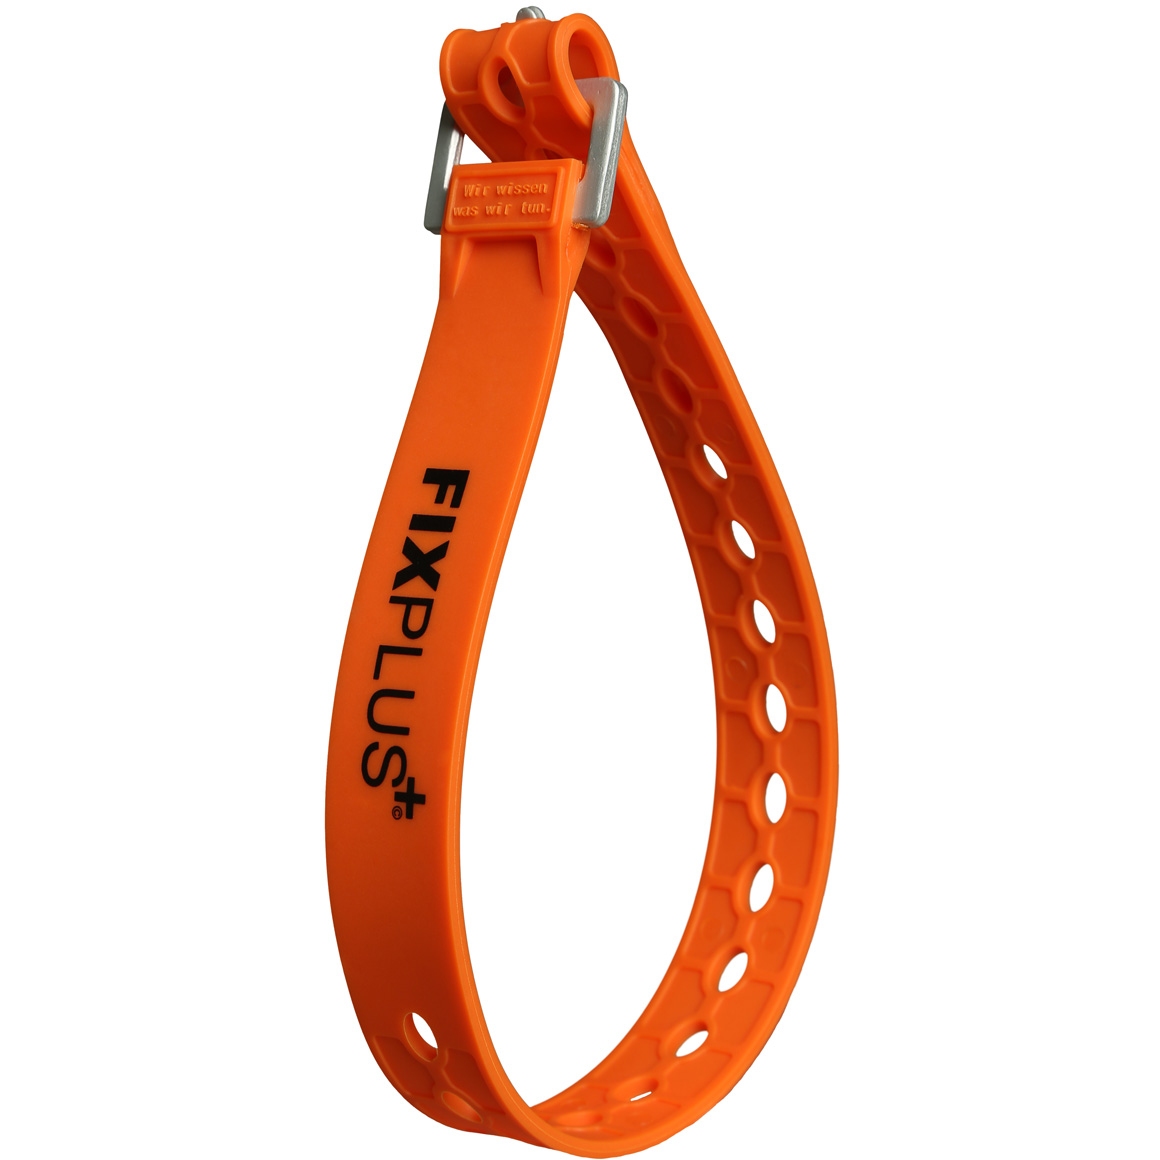 Productfoto van FixPlus Strap 66cm - orange